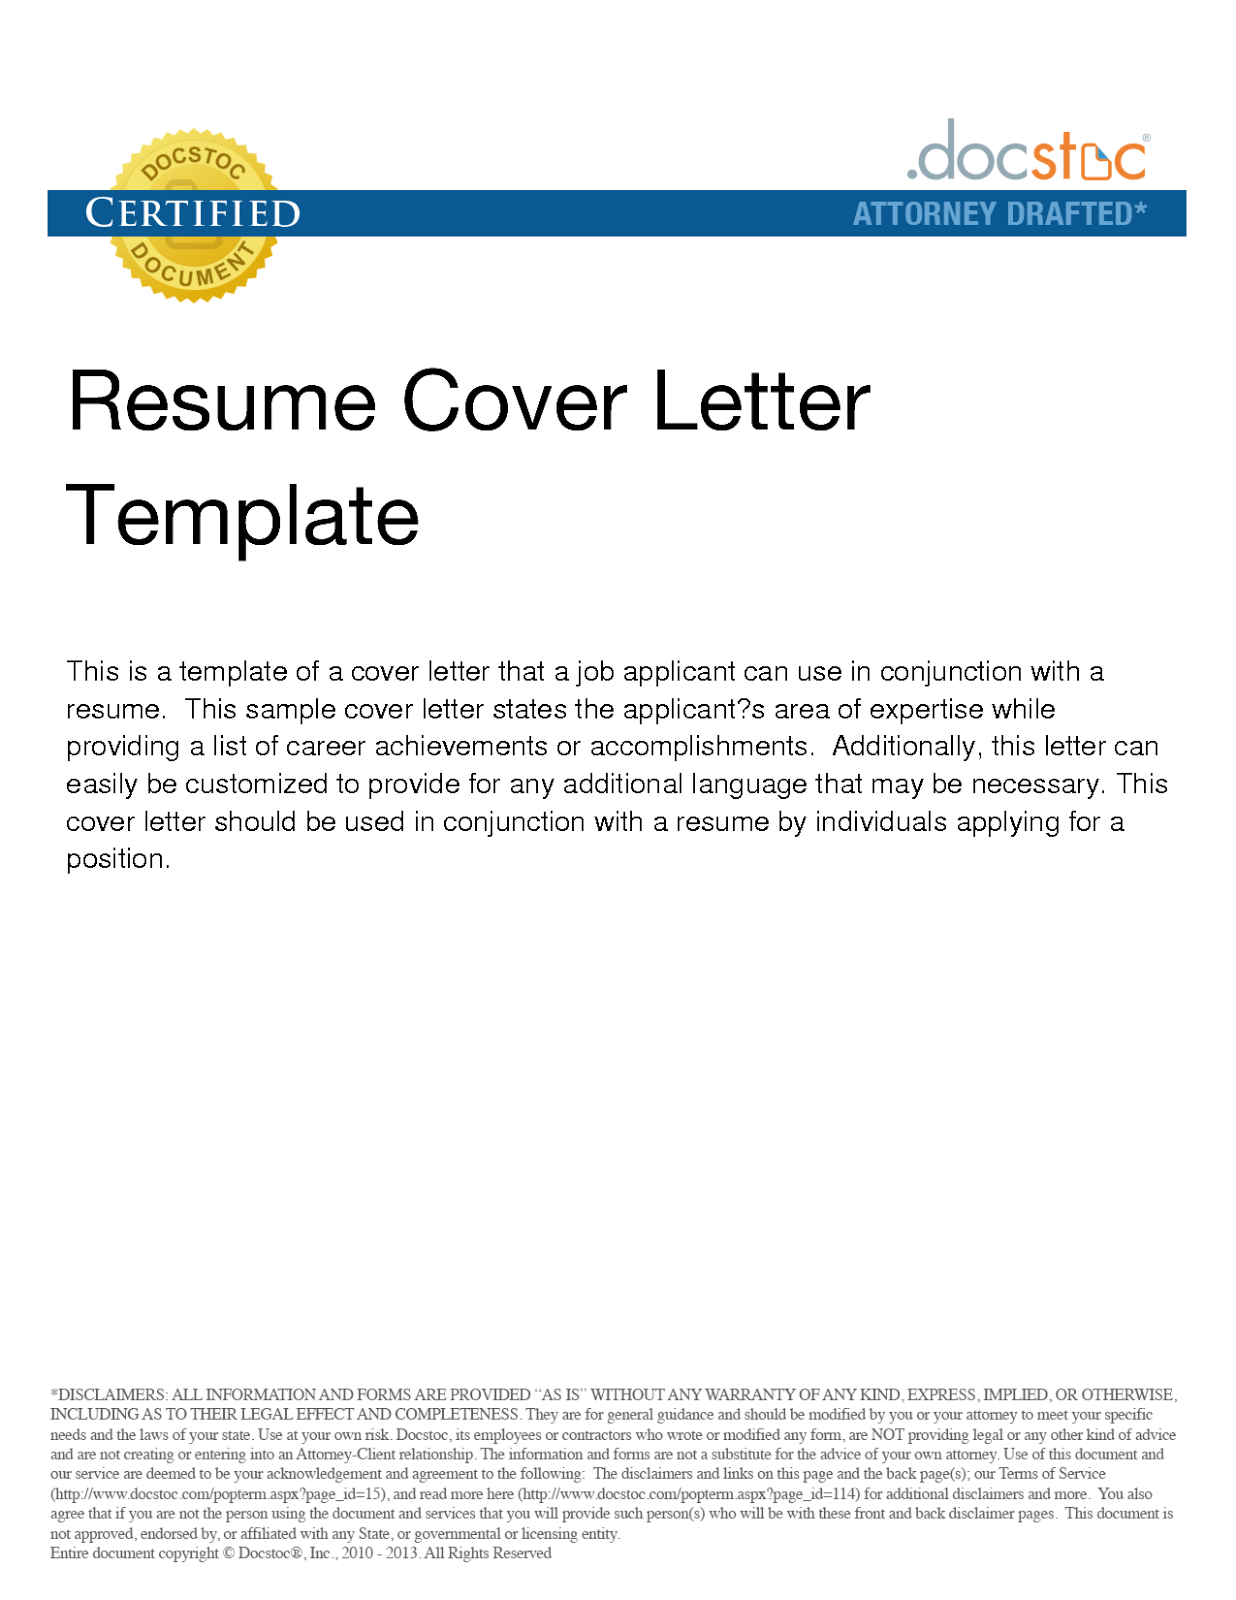 Sample resume acknowledgement email